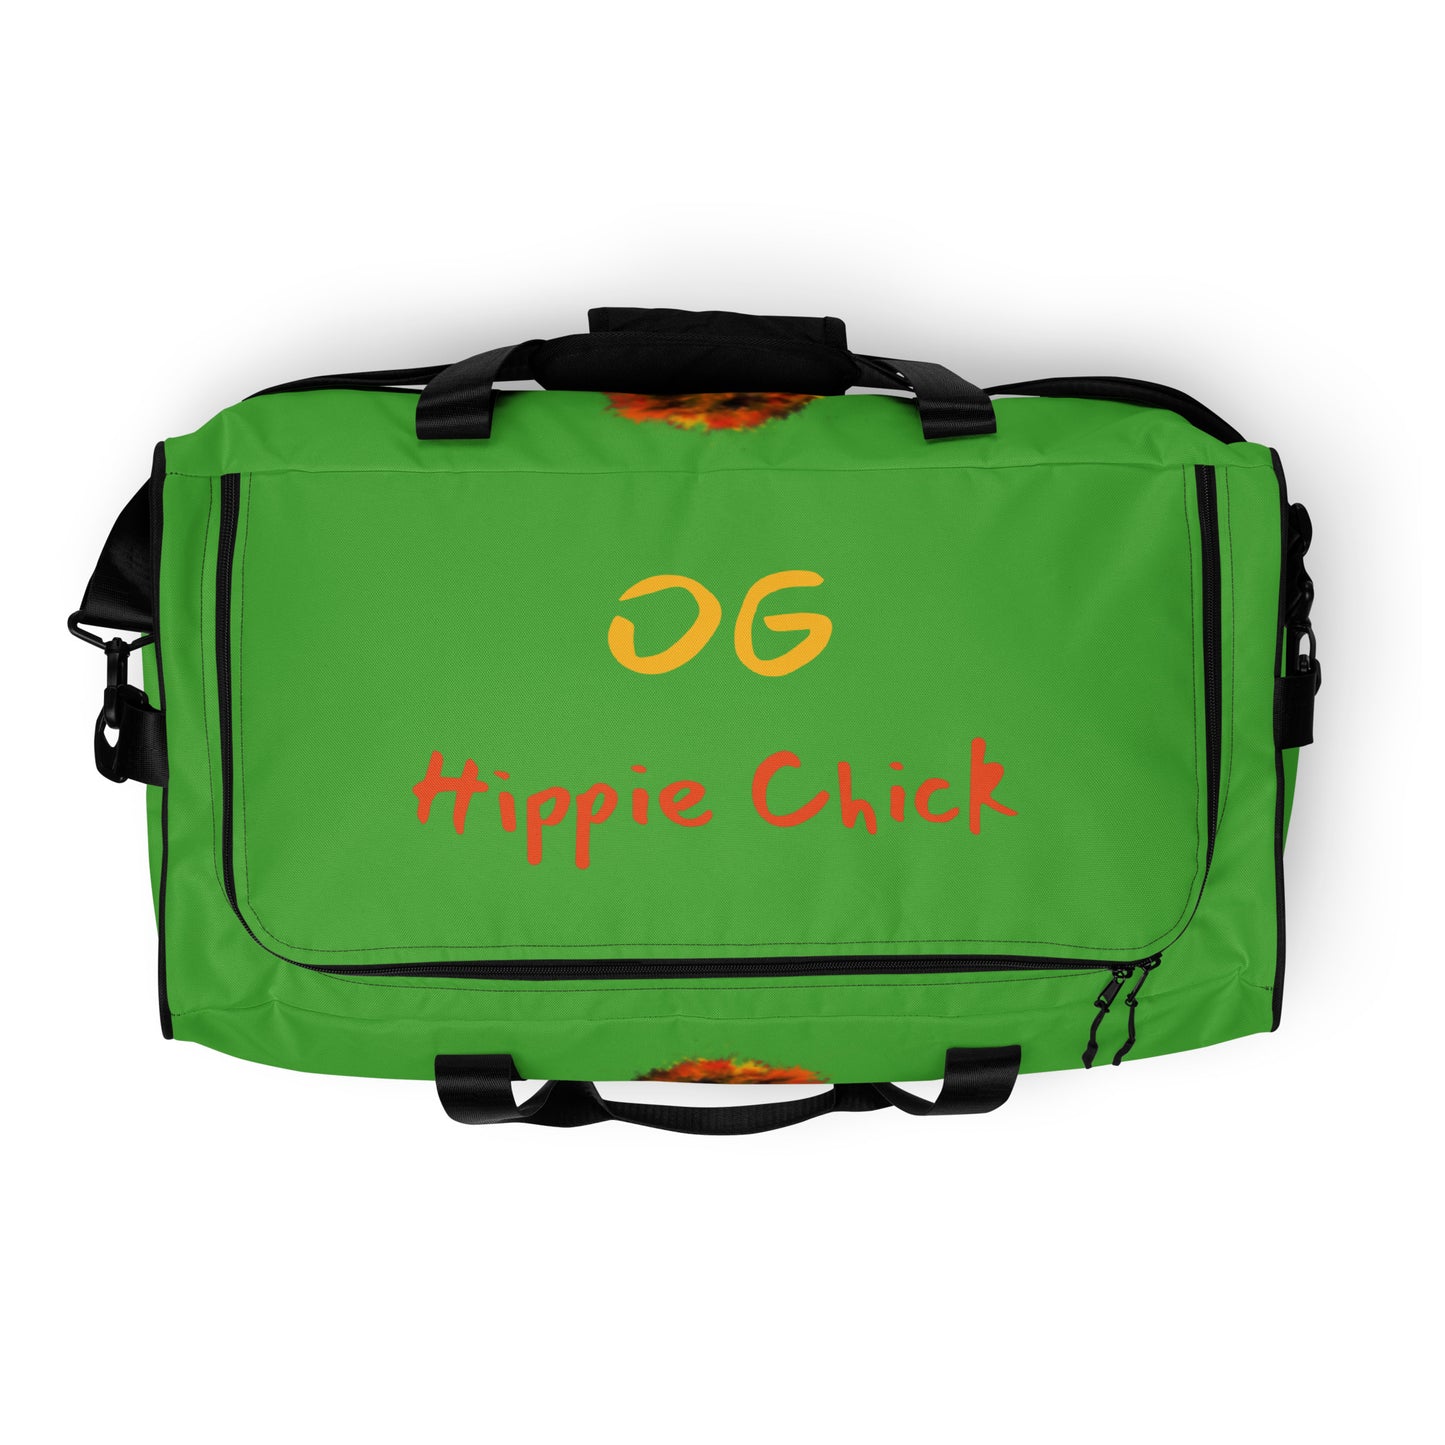 Grinch Duffle Bag - OG Hippie Chick